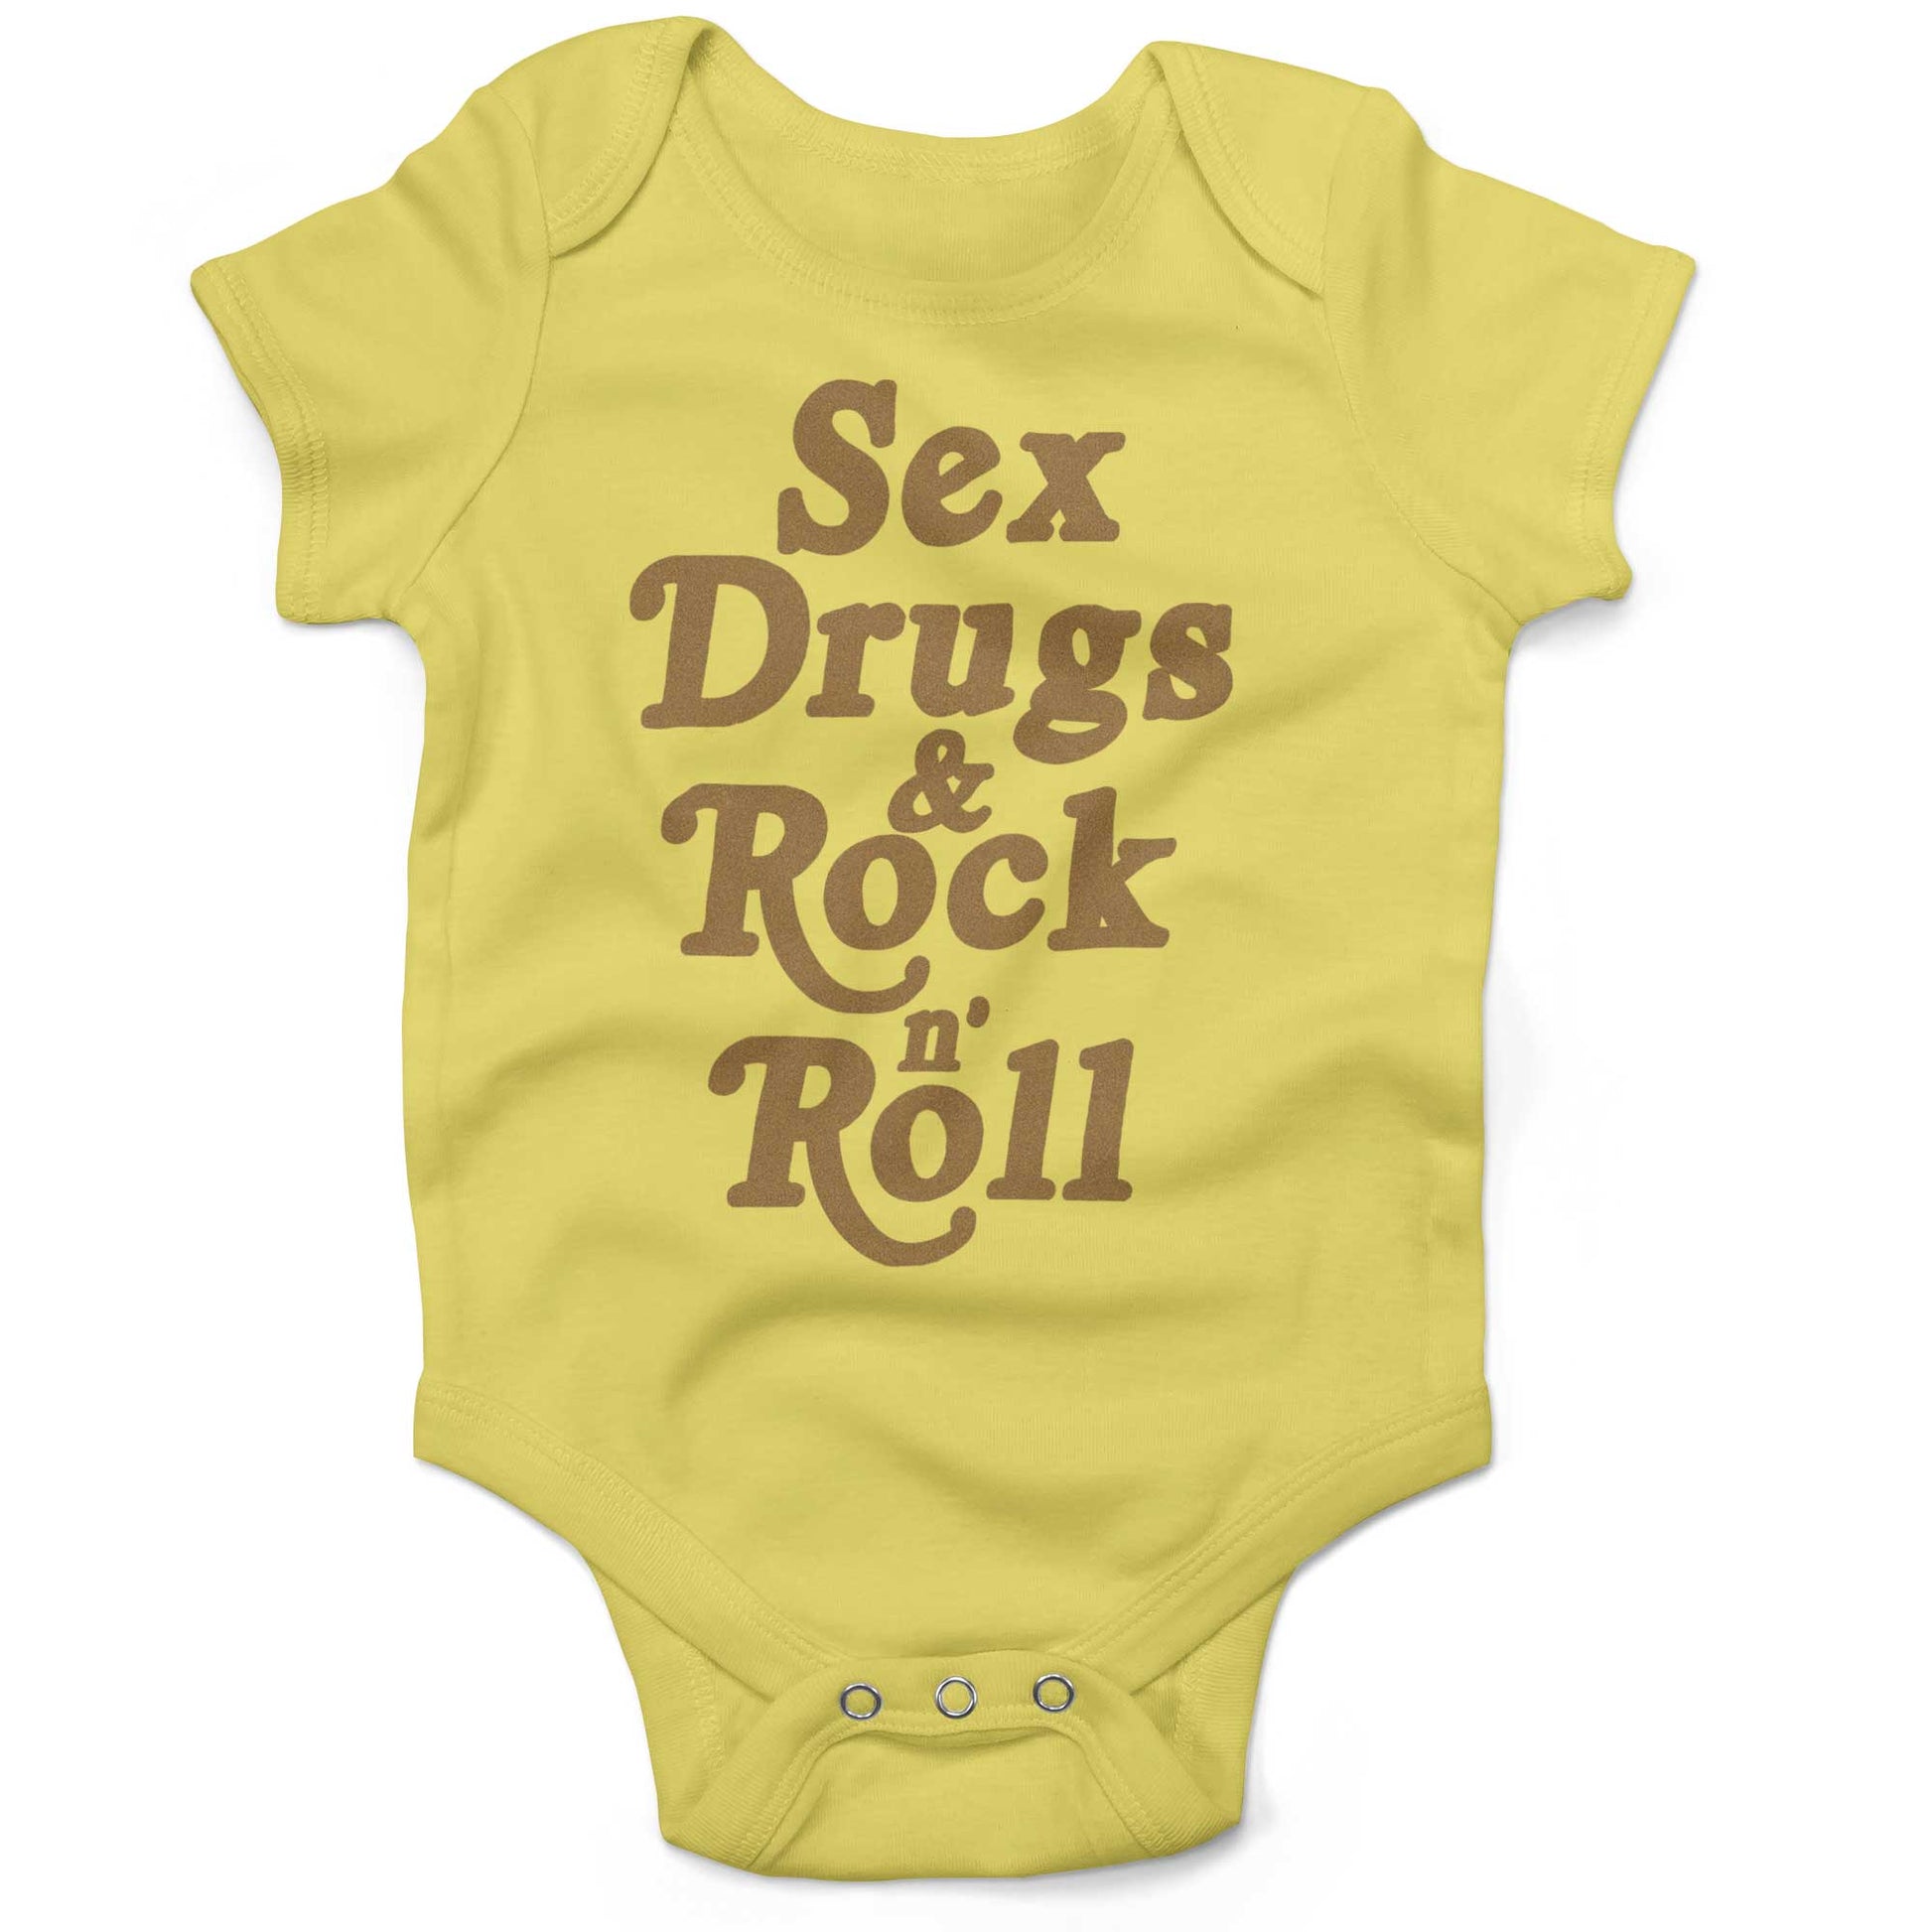 Sex, Drugs & Rock 'n Roll Infant Bodysuit or Raglan Baby Tee-Yellow-3-6 months